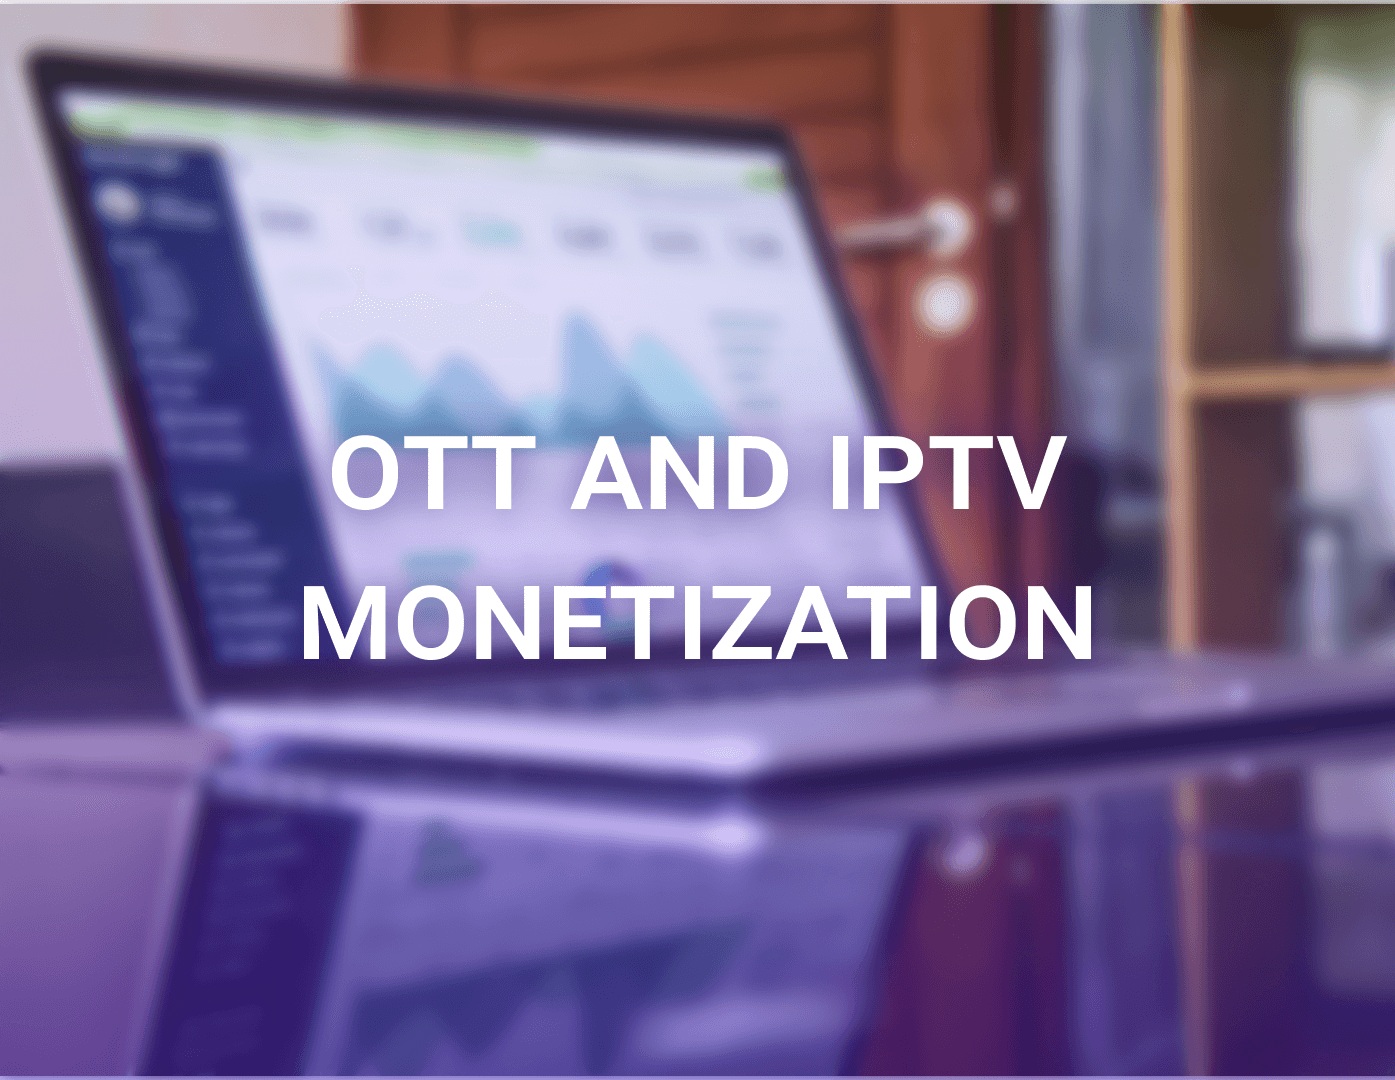 Monetization of OTT and IPTV